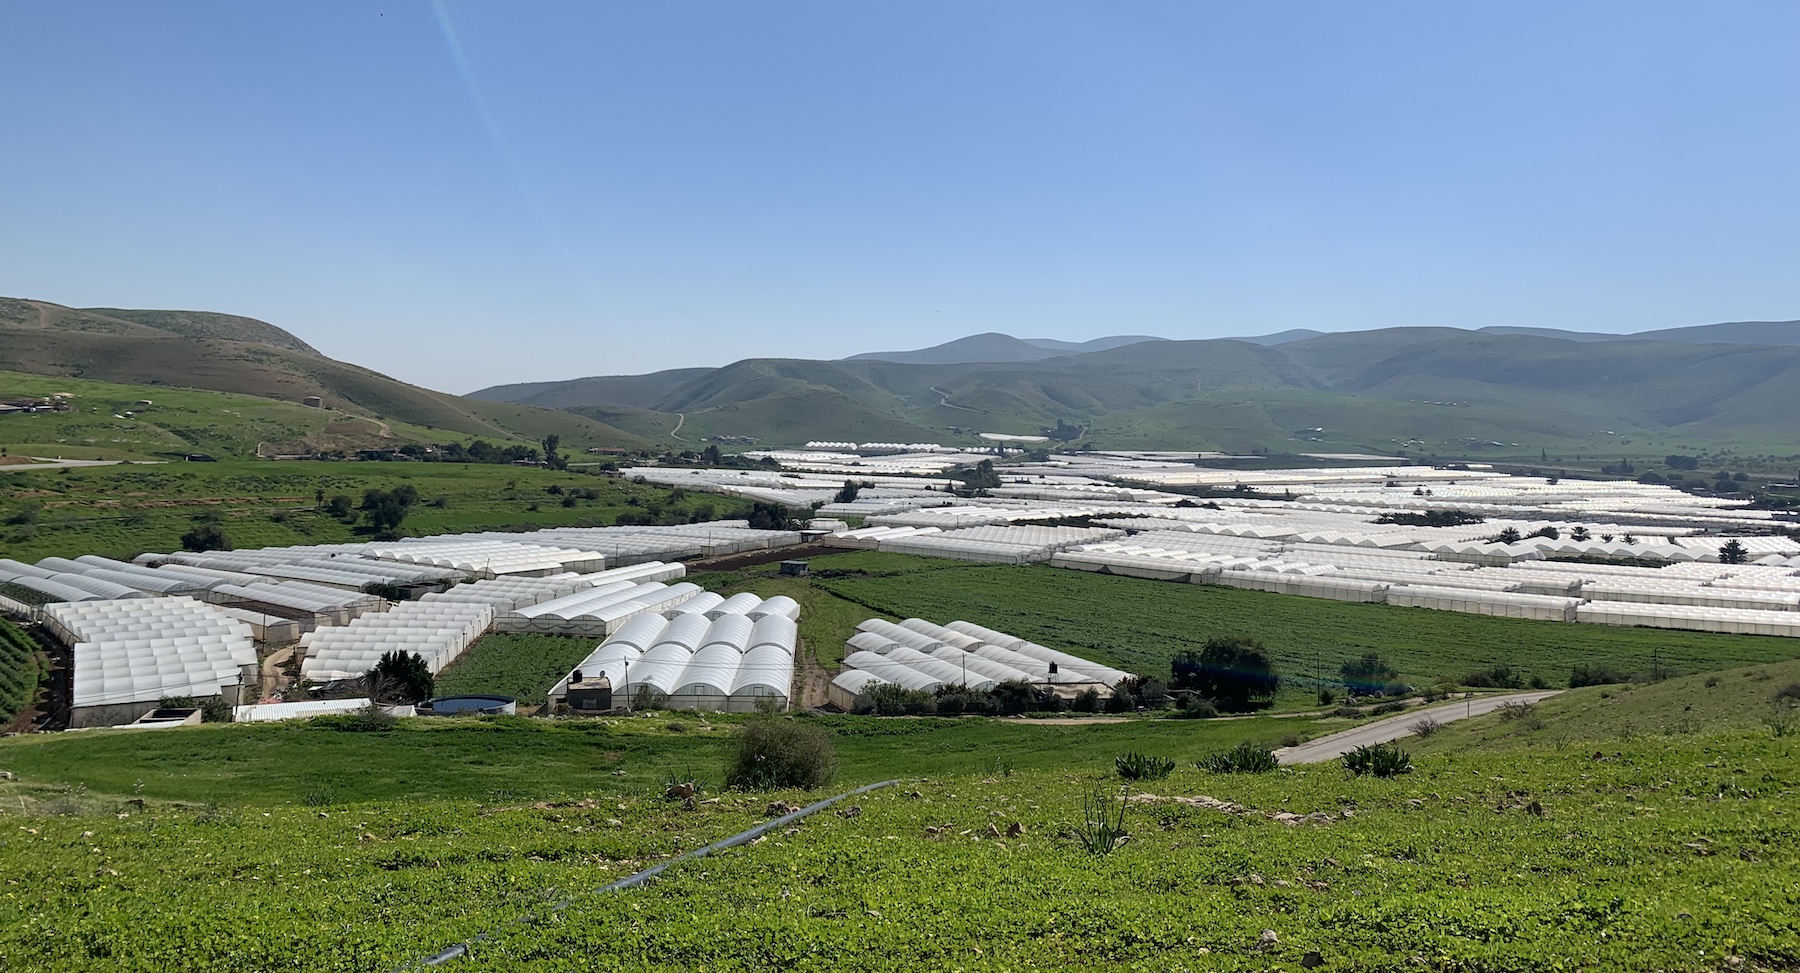 Greenhouse farming in Palestinian village